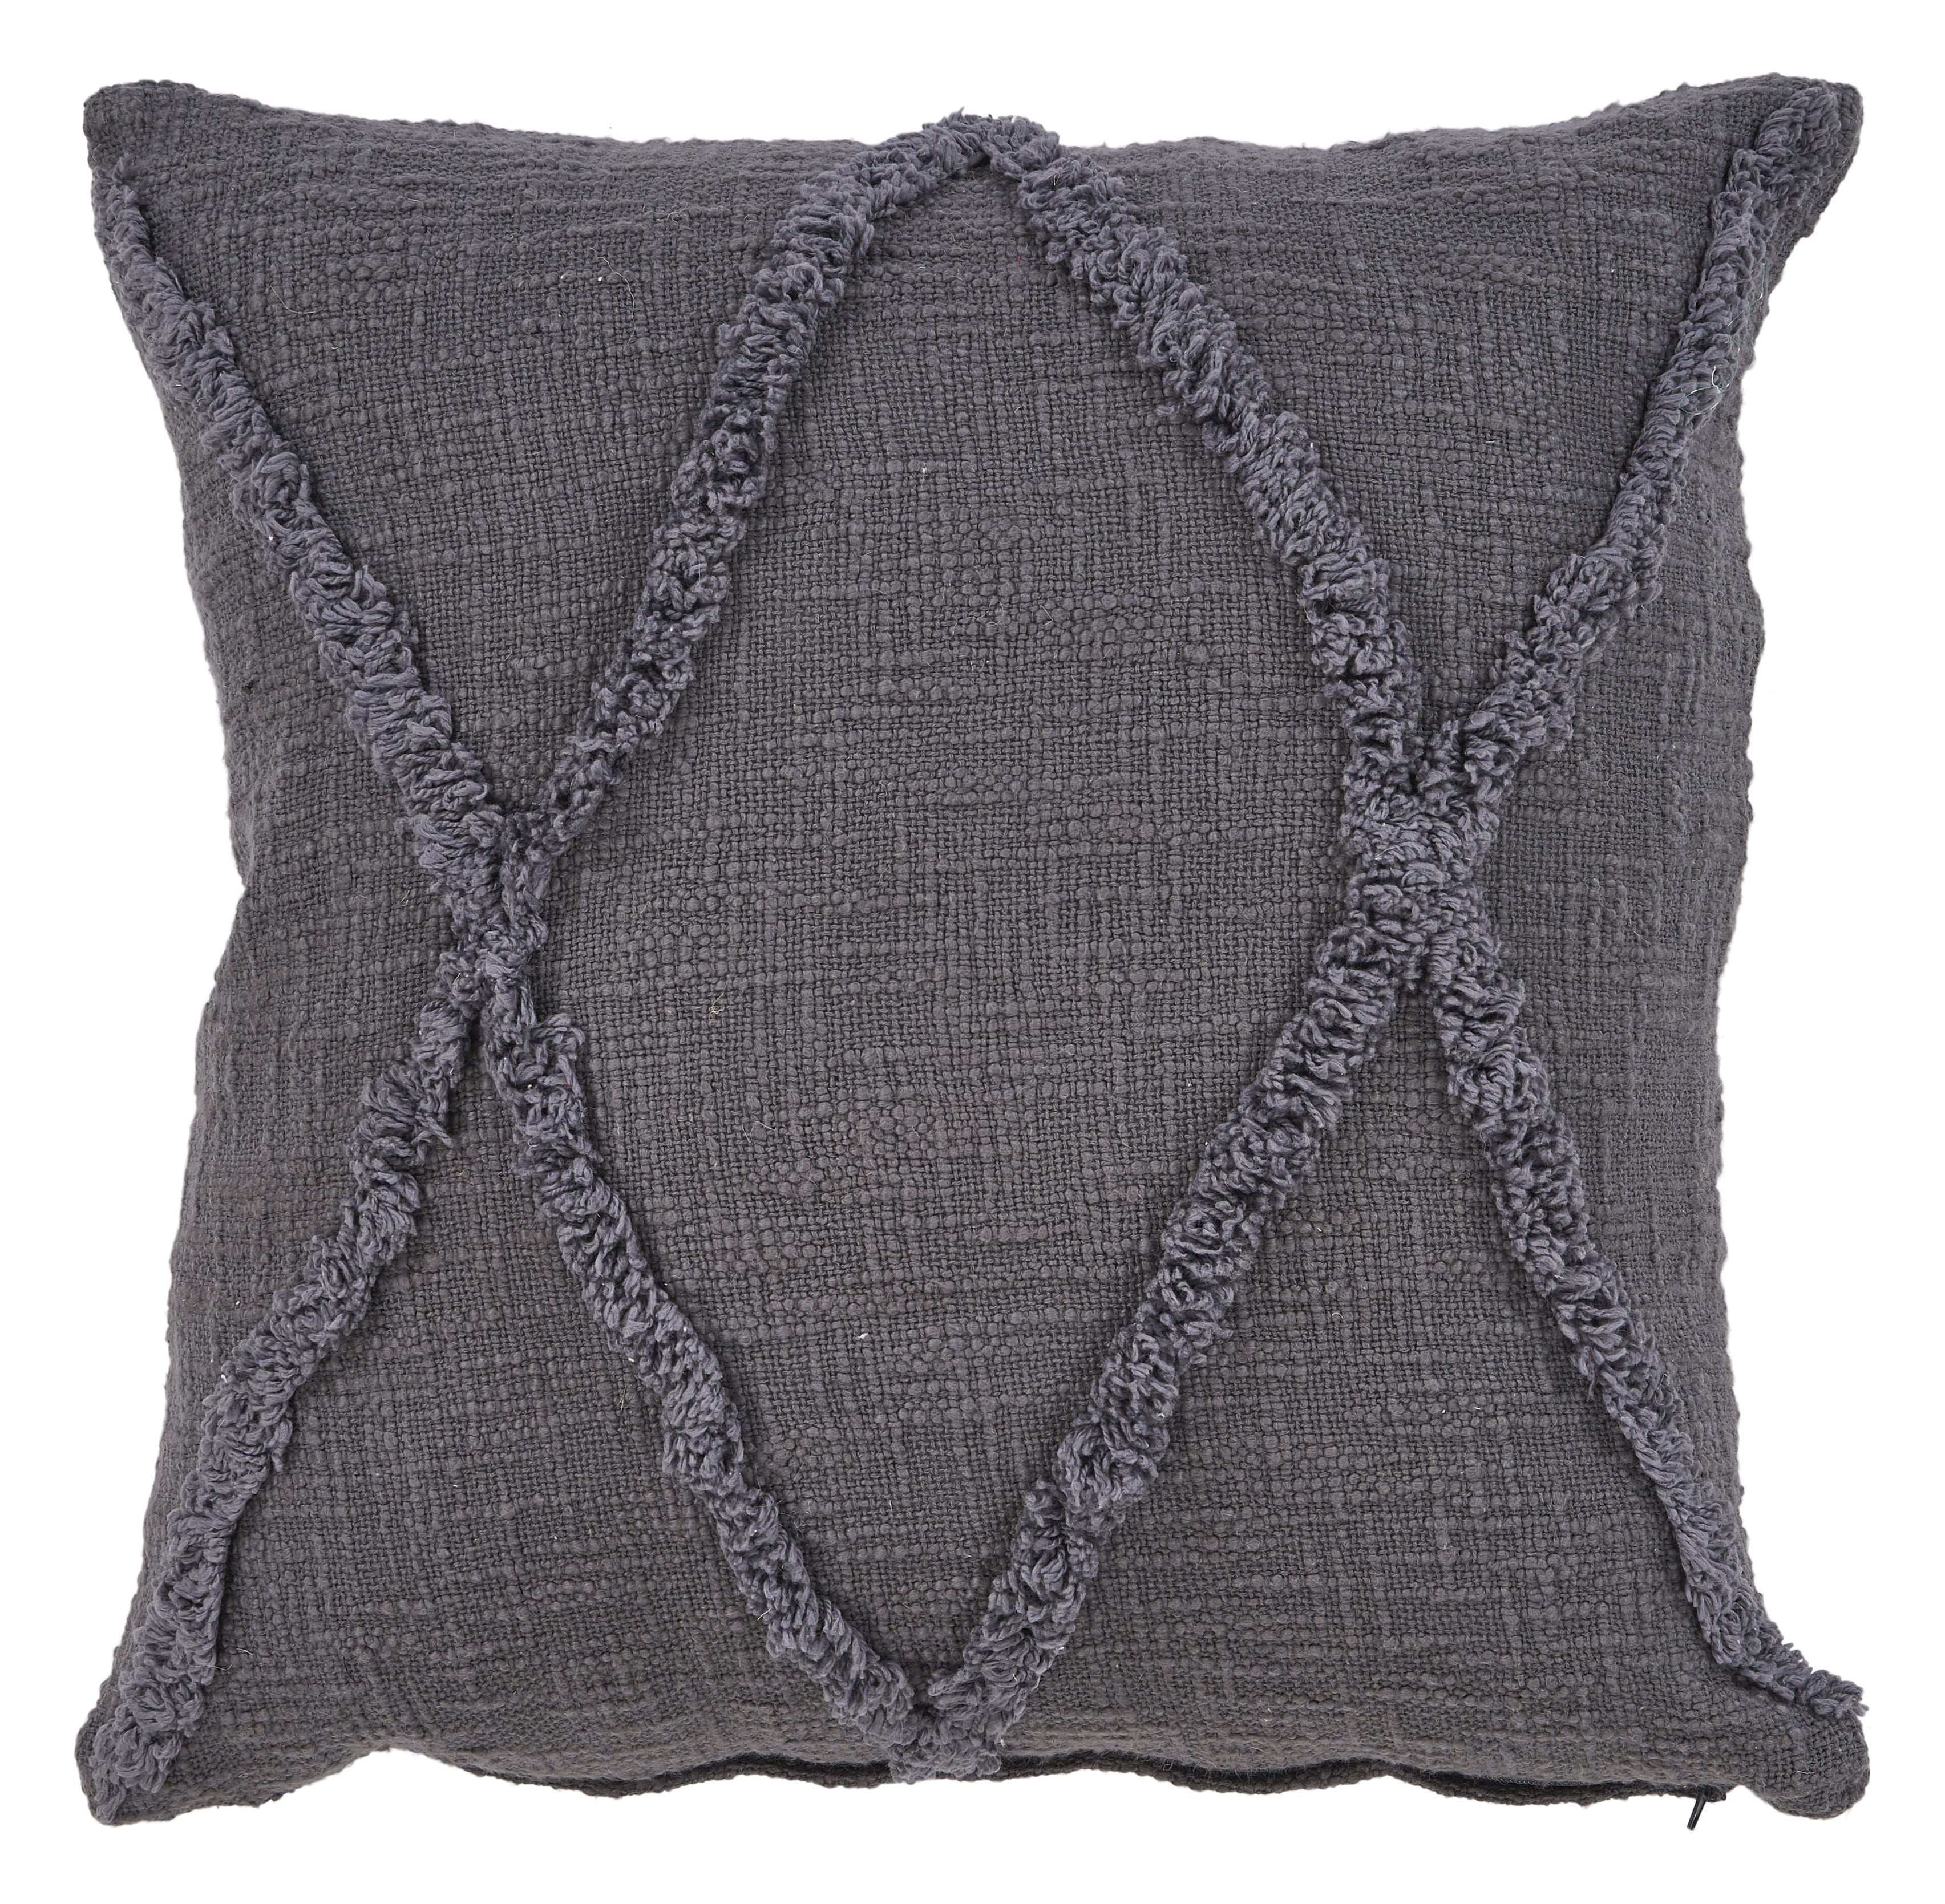 Light Gray and White Pillow Silver Grey Woven Geometric Diamond Pillow  Cover Throw Pillow Designer Grey Pillow 